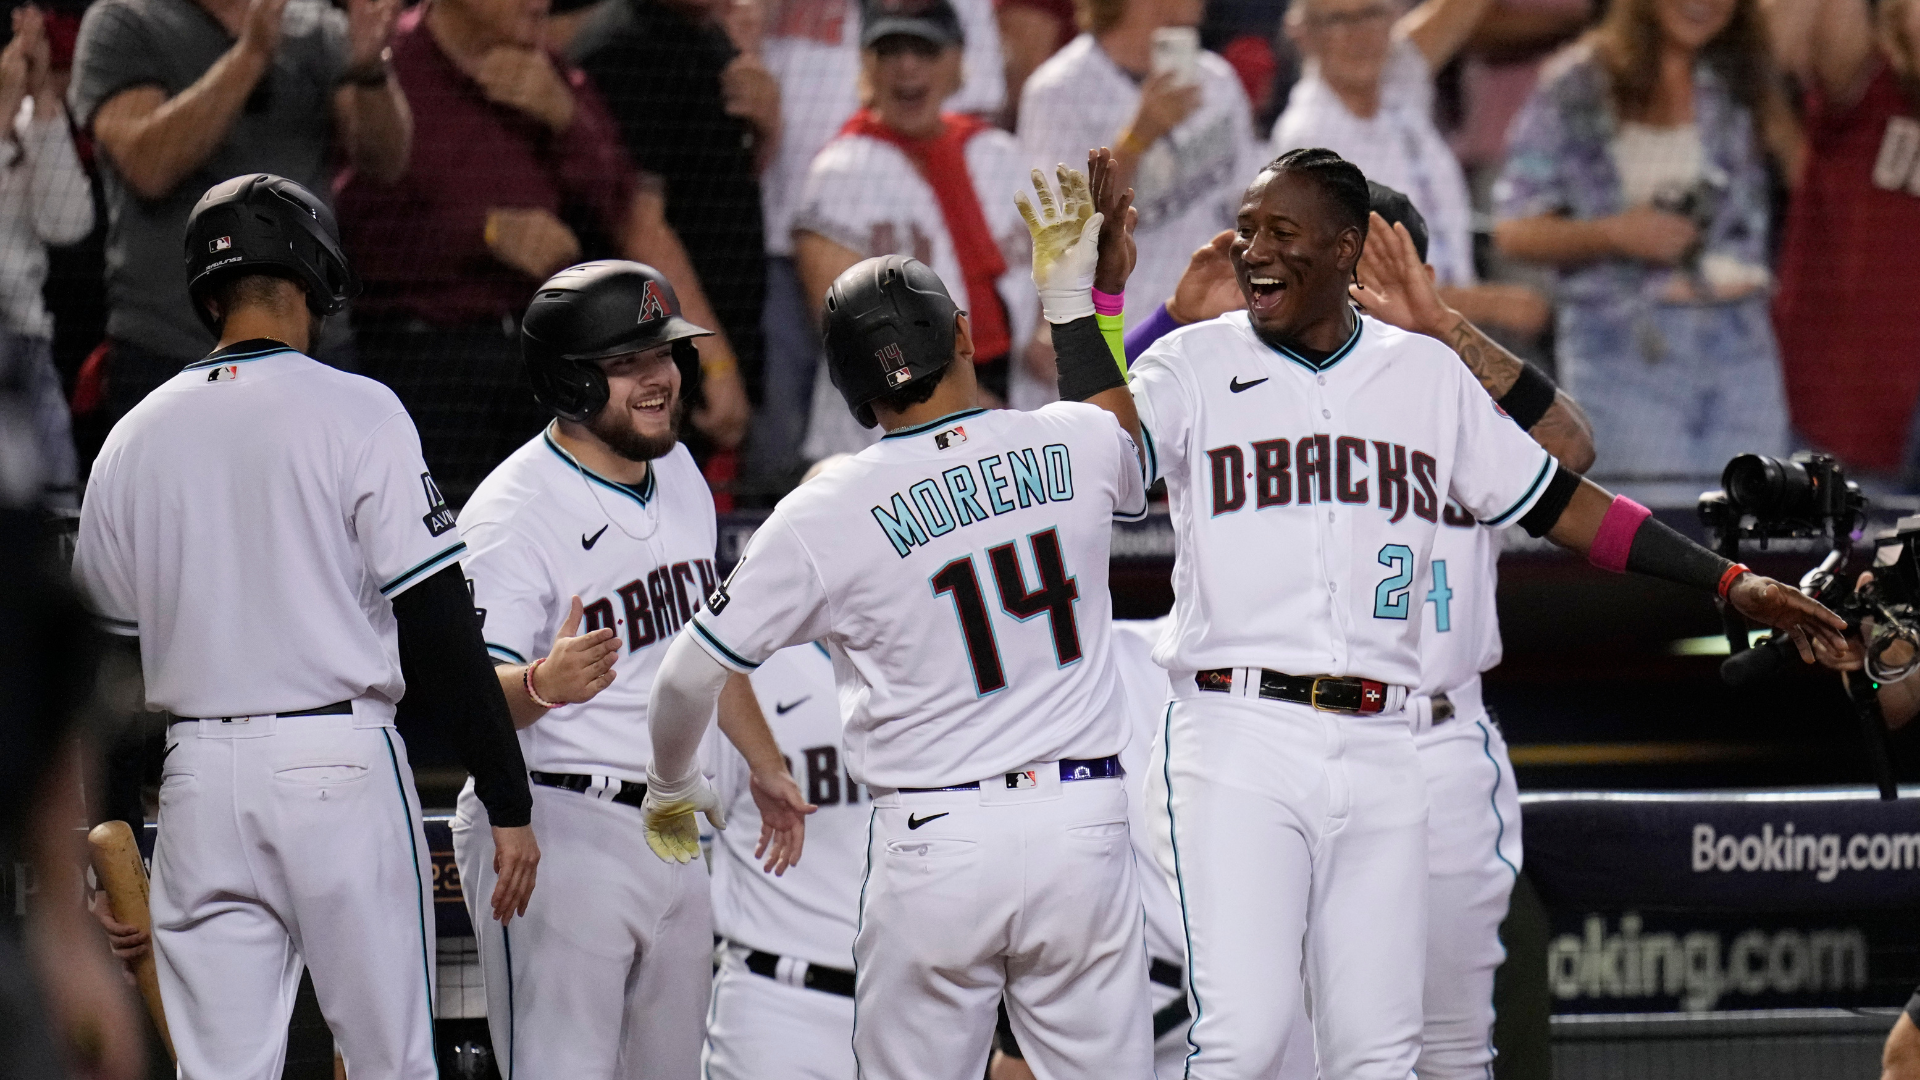 The Diamondbacks' dark gray baseball uniforms are spectacular